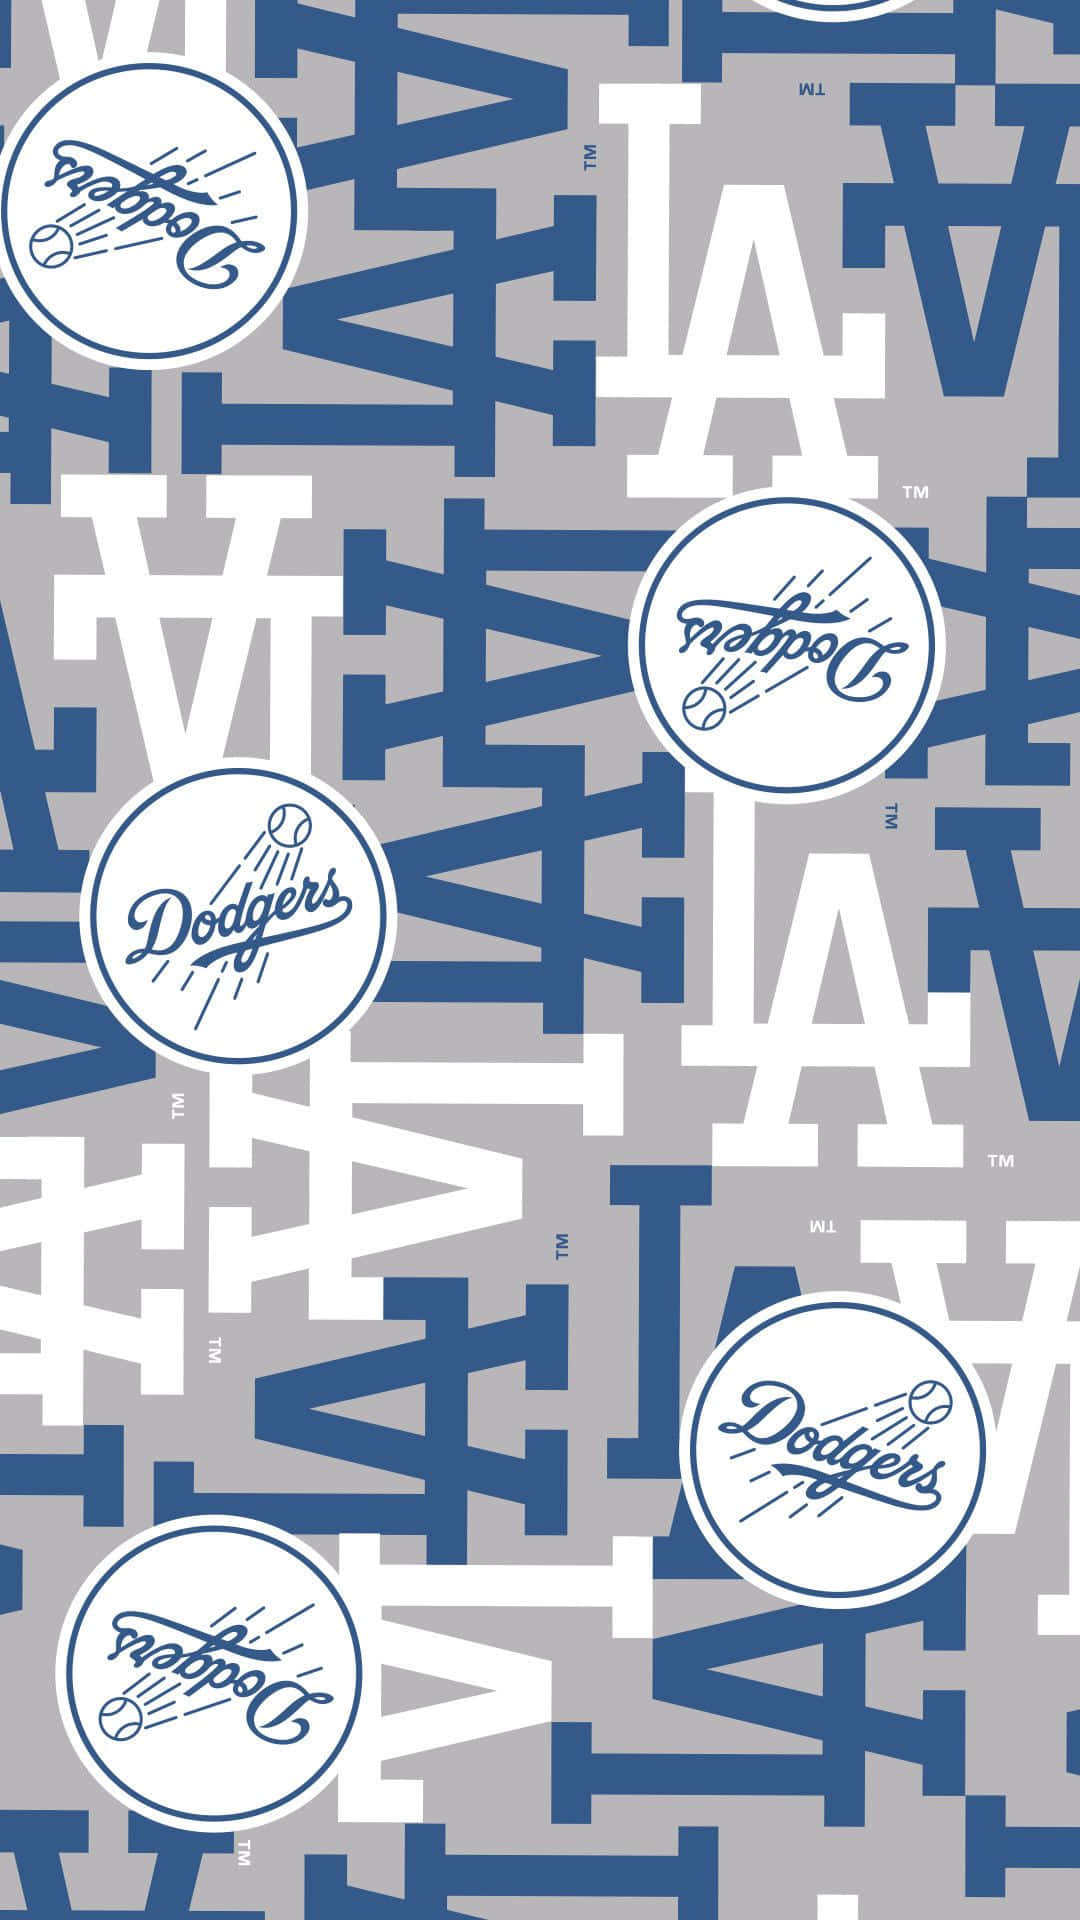 Dodgers Iphone 1080 X 1920 Wallpaper